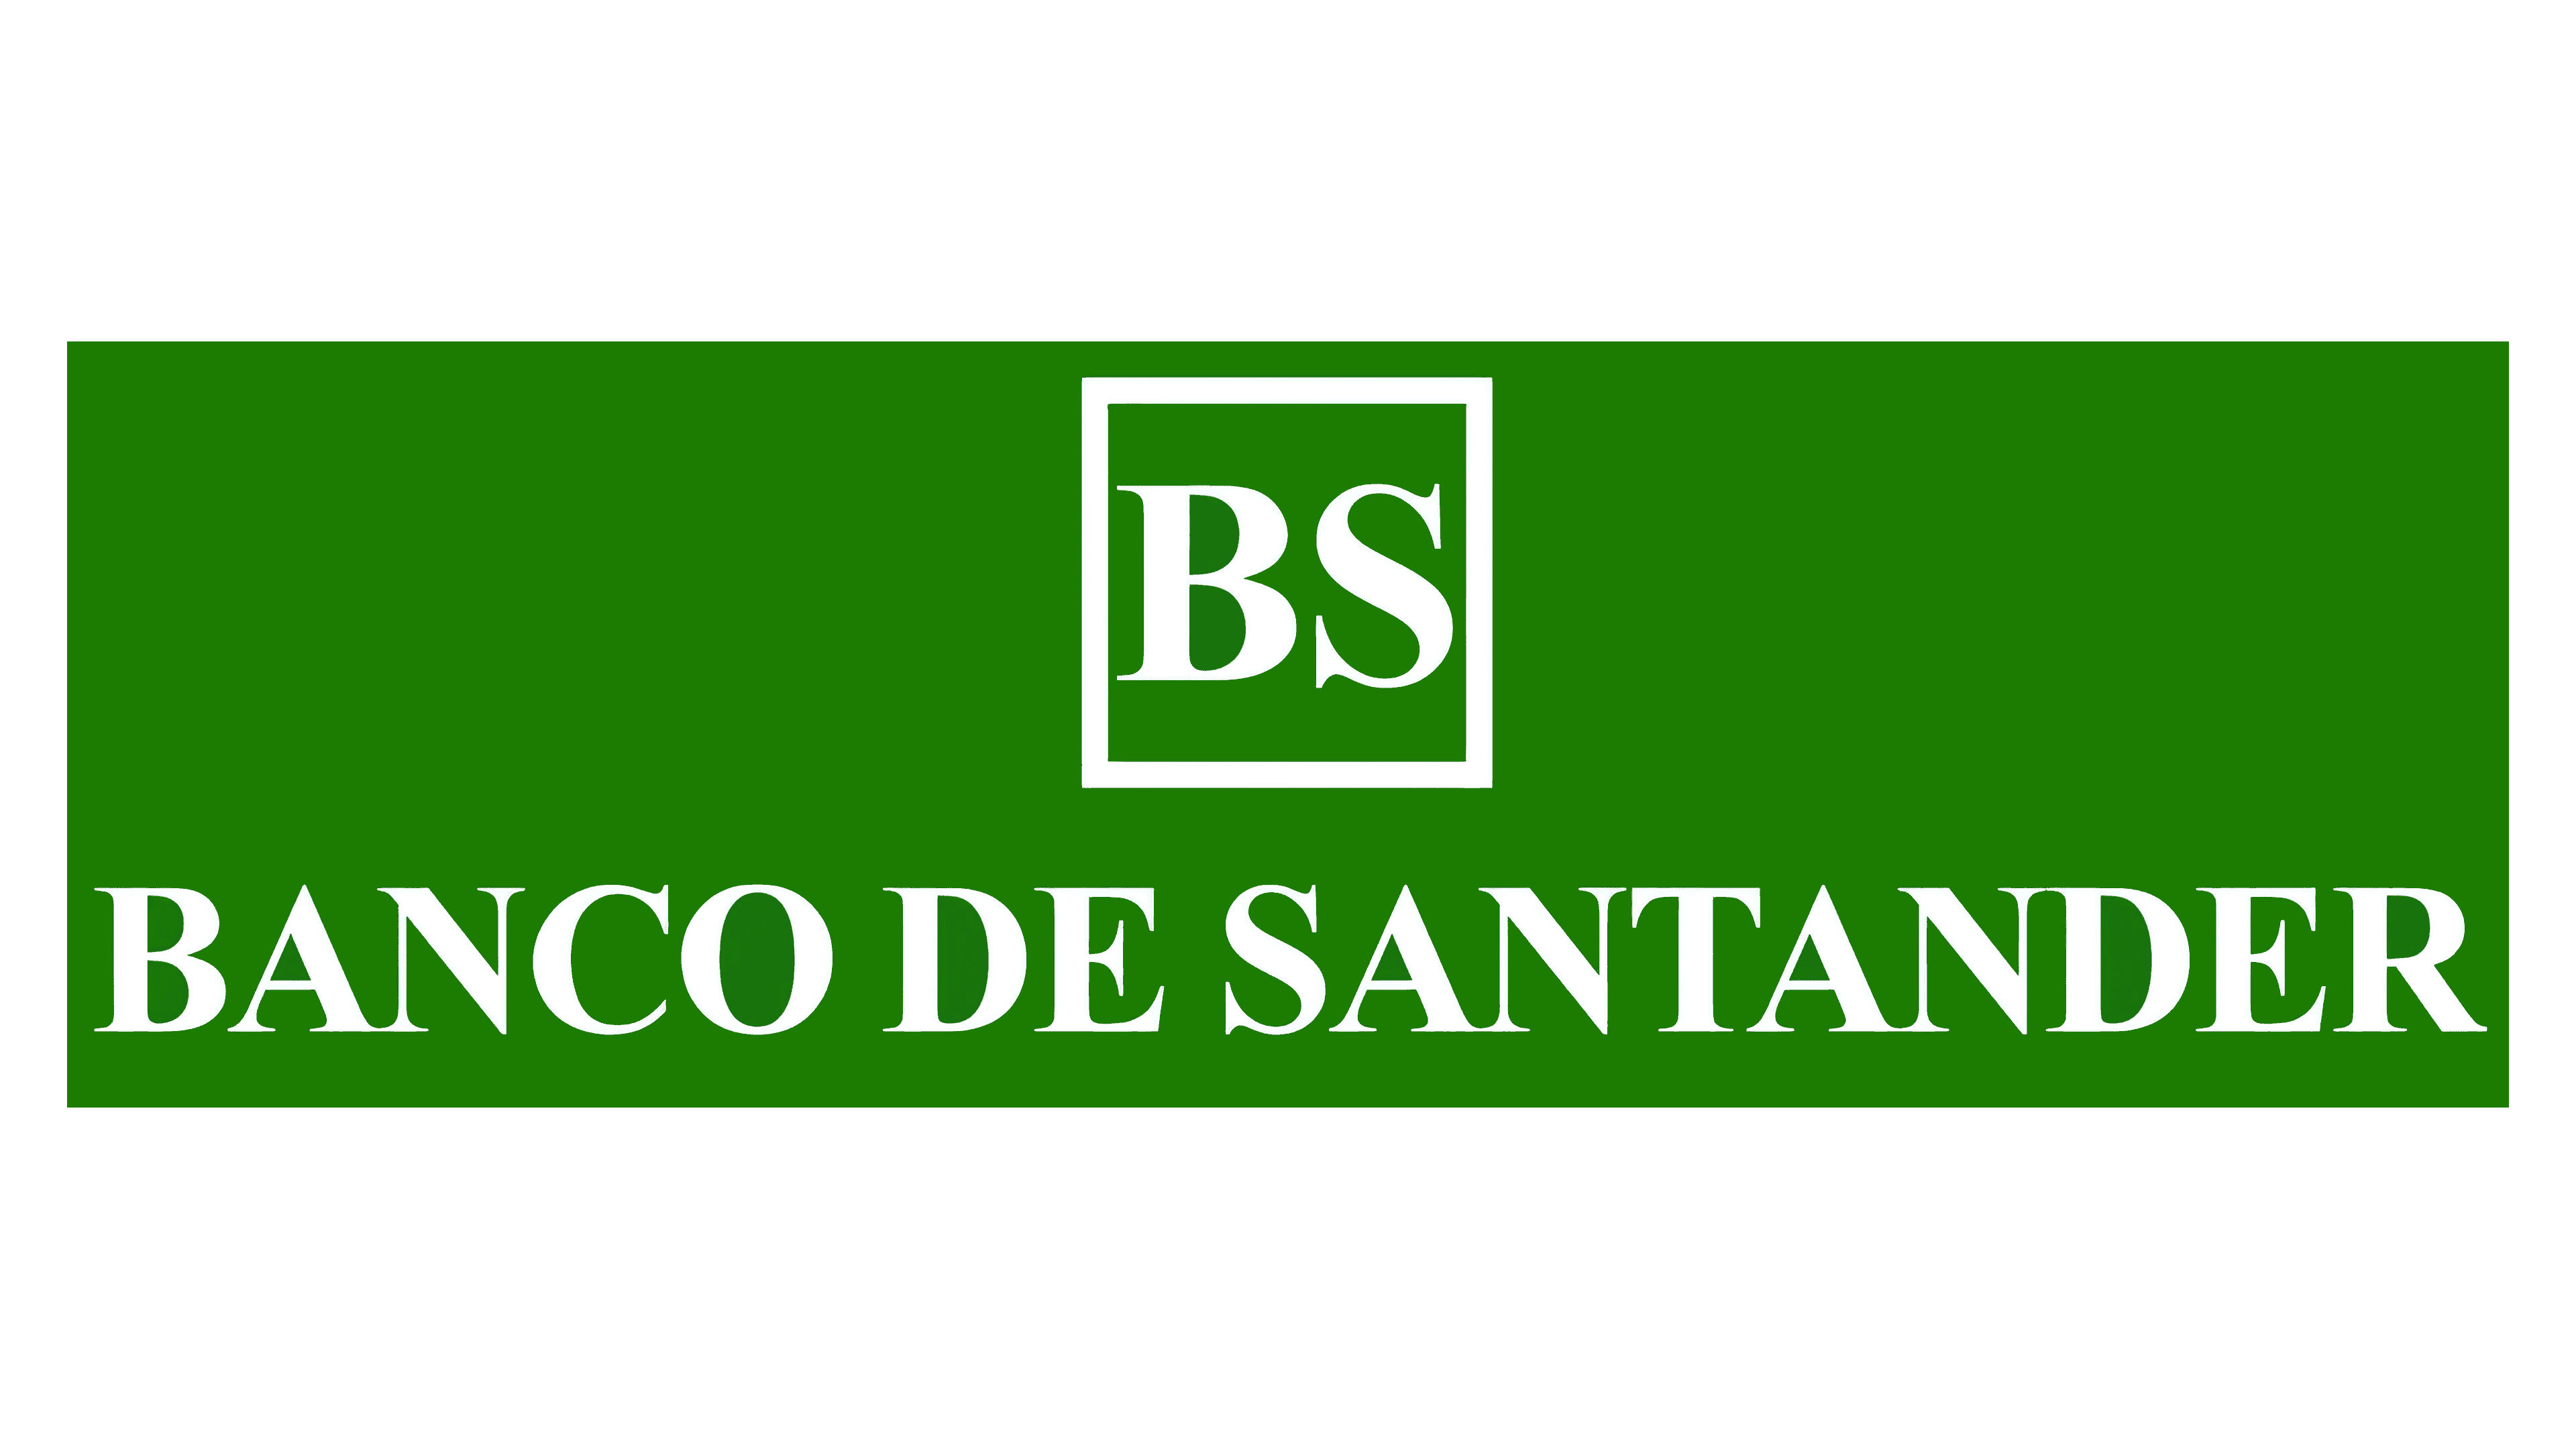 Santander Logo, meaning, history, PNG, SVG, vector